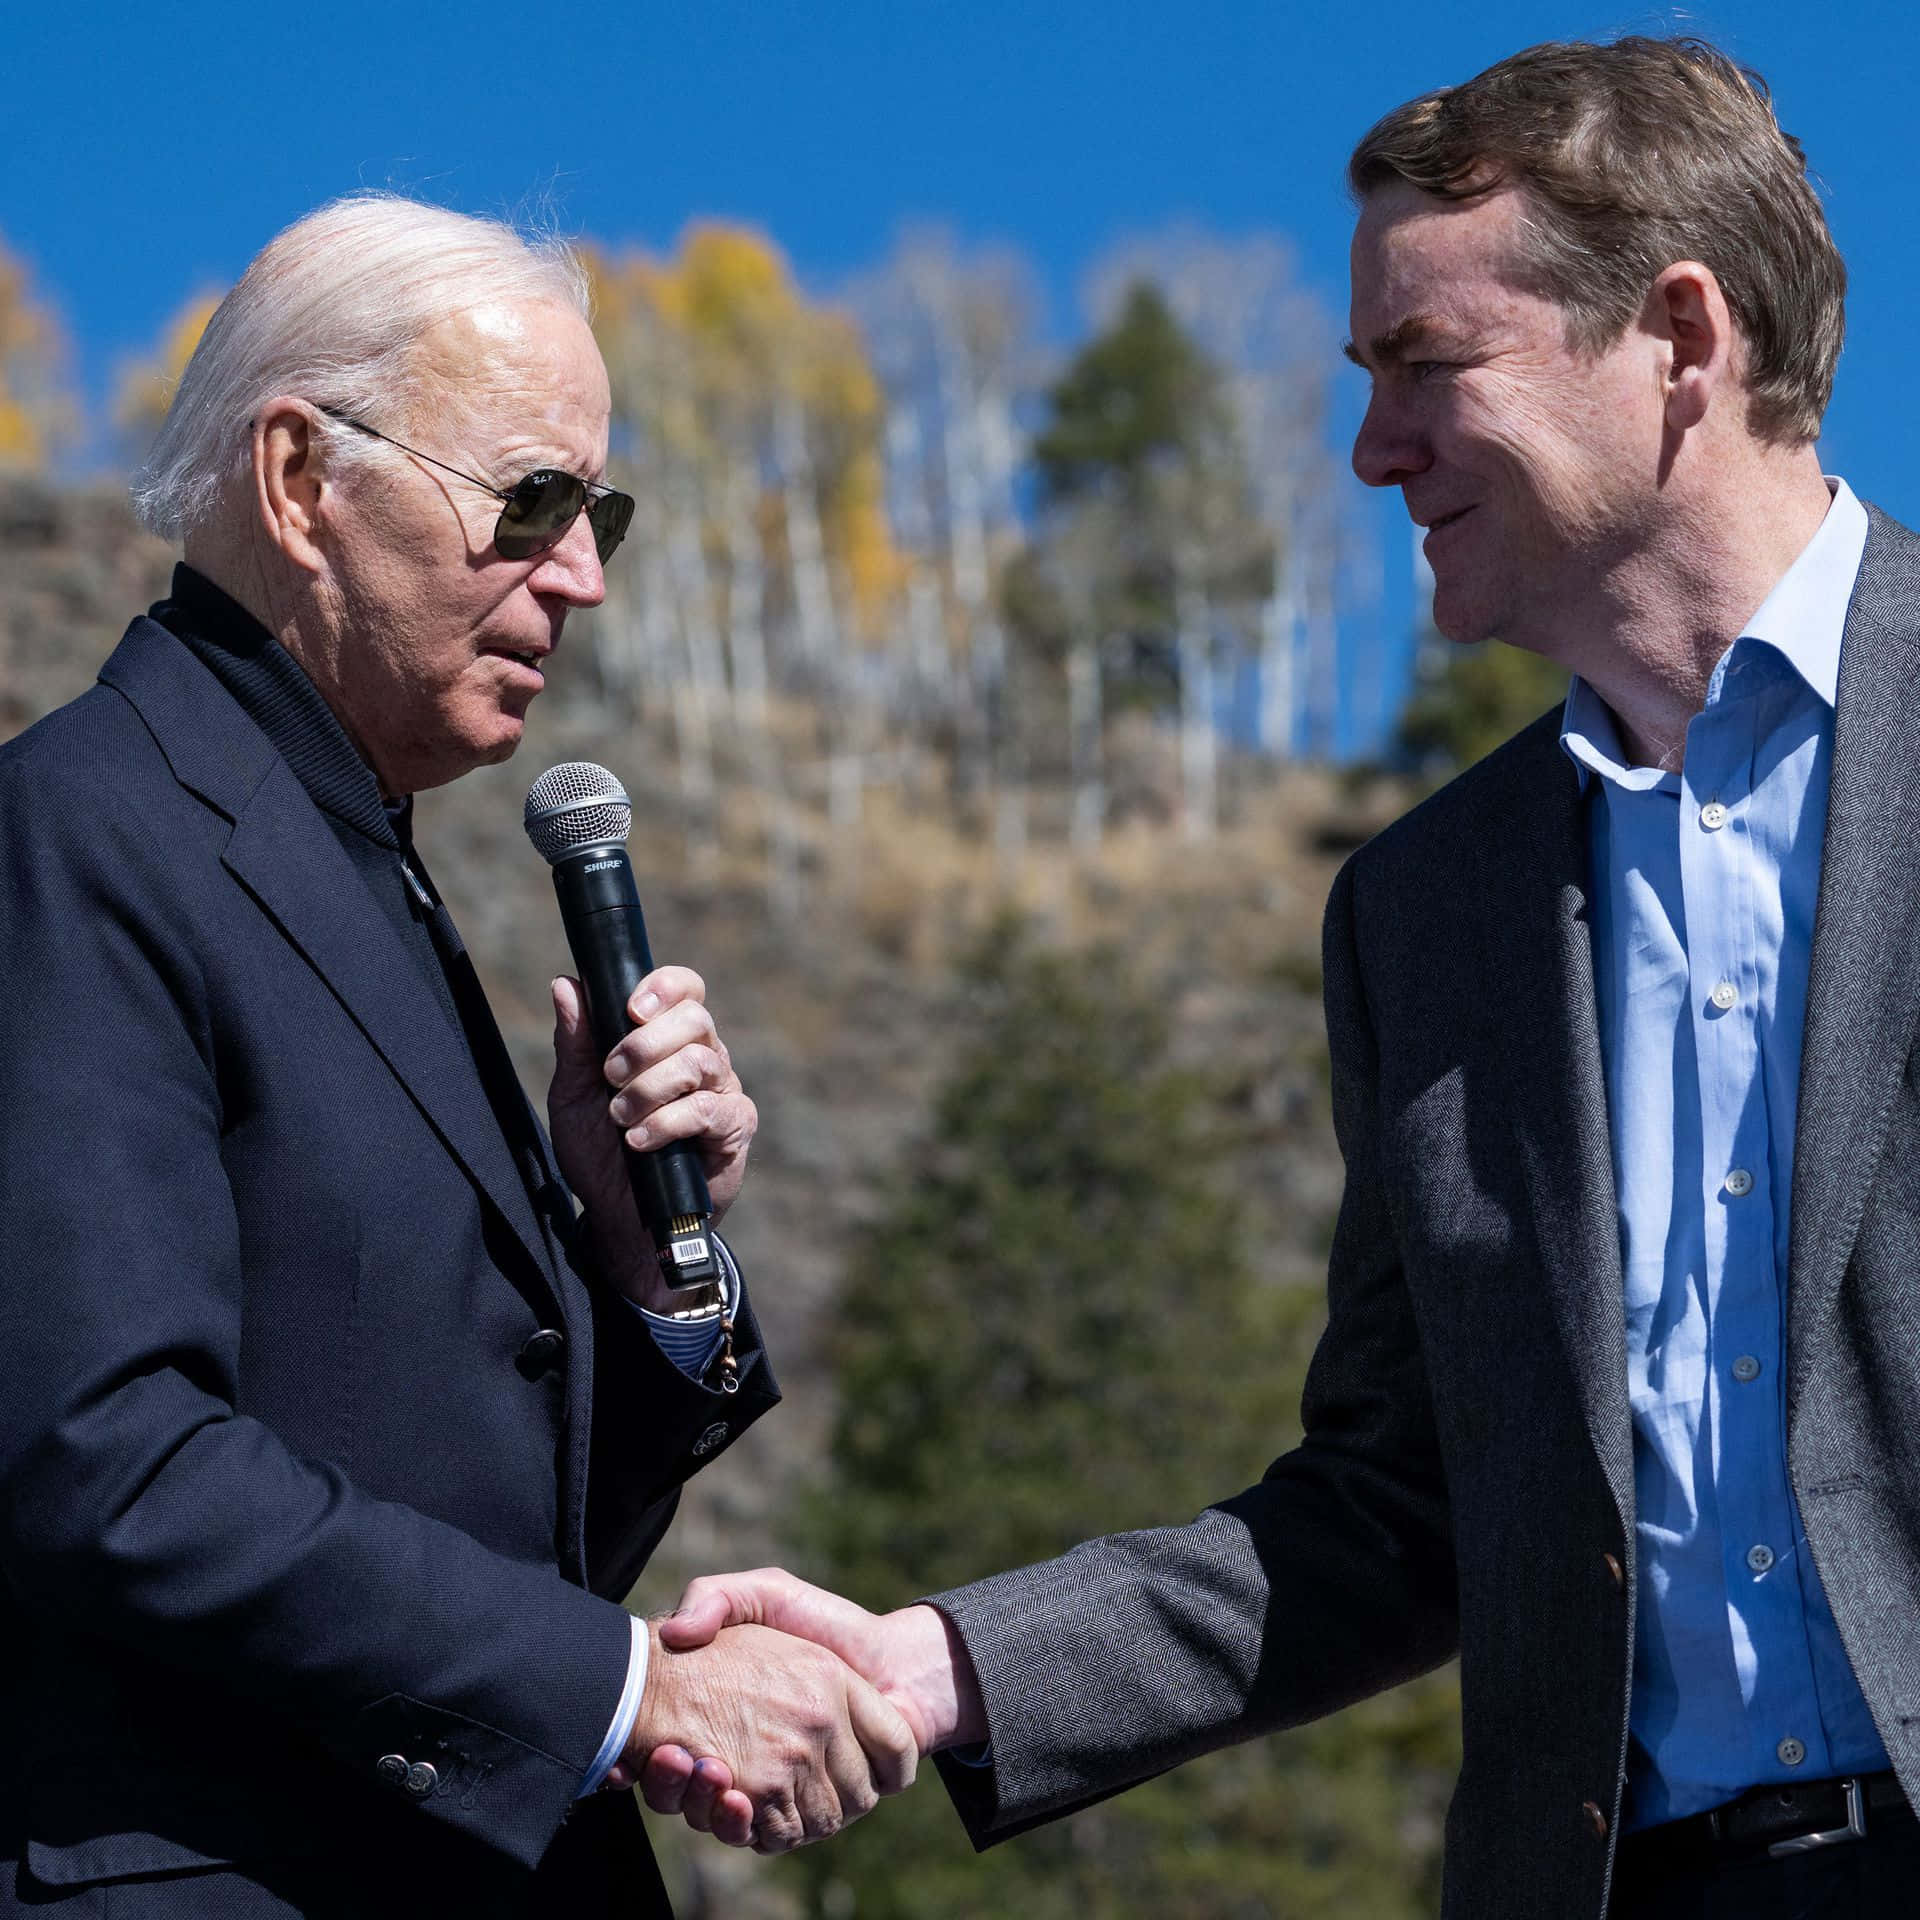 Senator Michael Bennet shaking hands with Joe Biden. Wallpaper